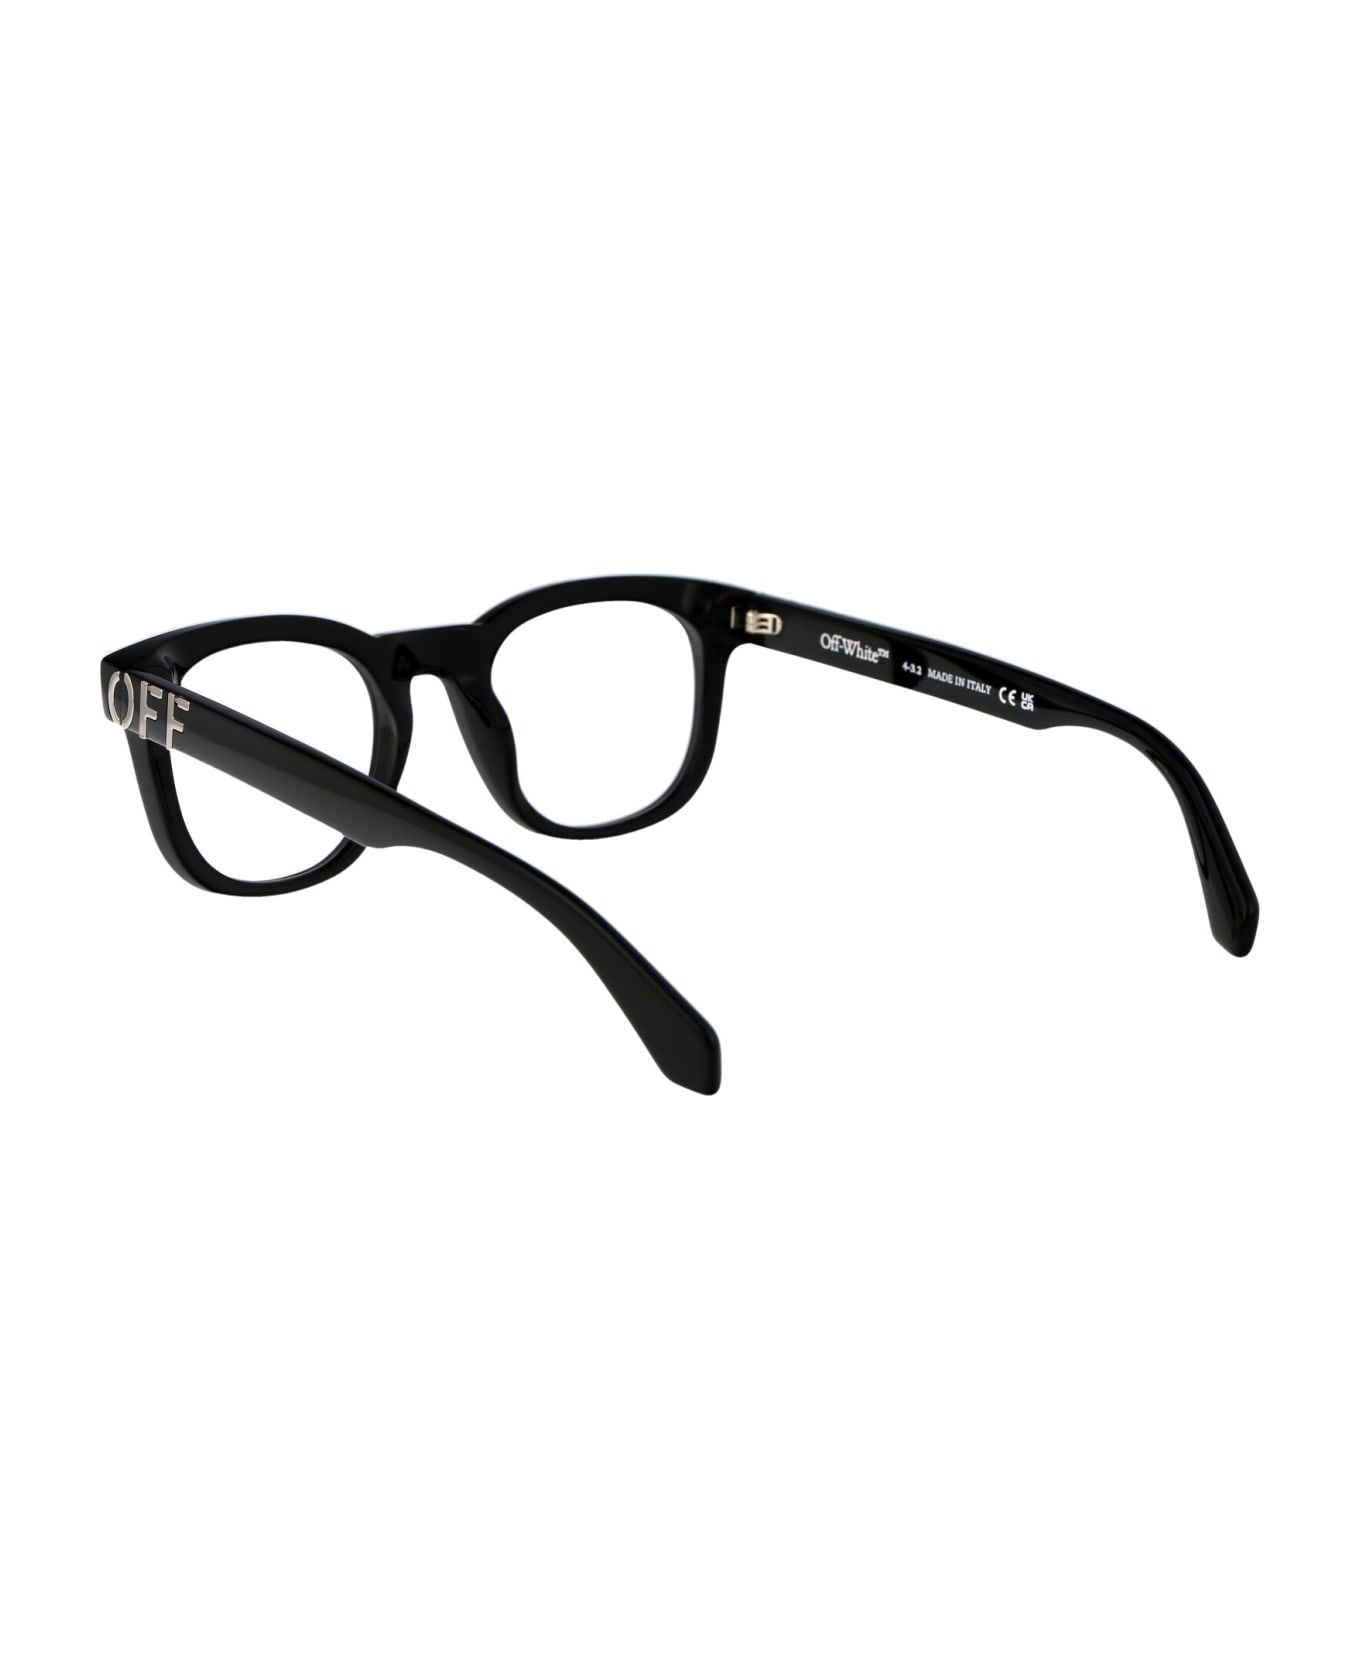 Off-White Optical Style 71 Glasses - 1000 BLACK